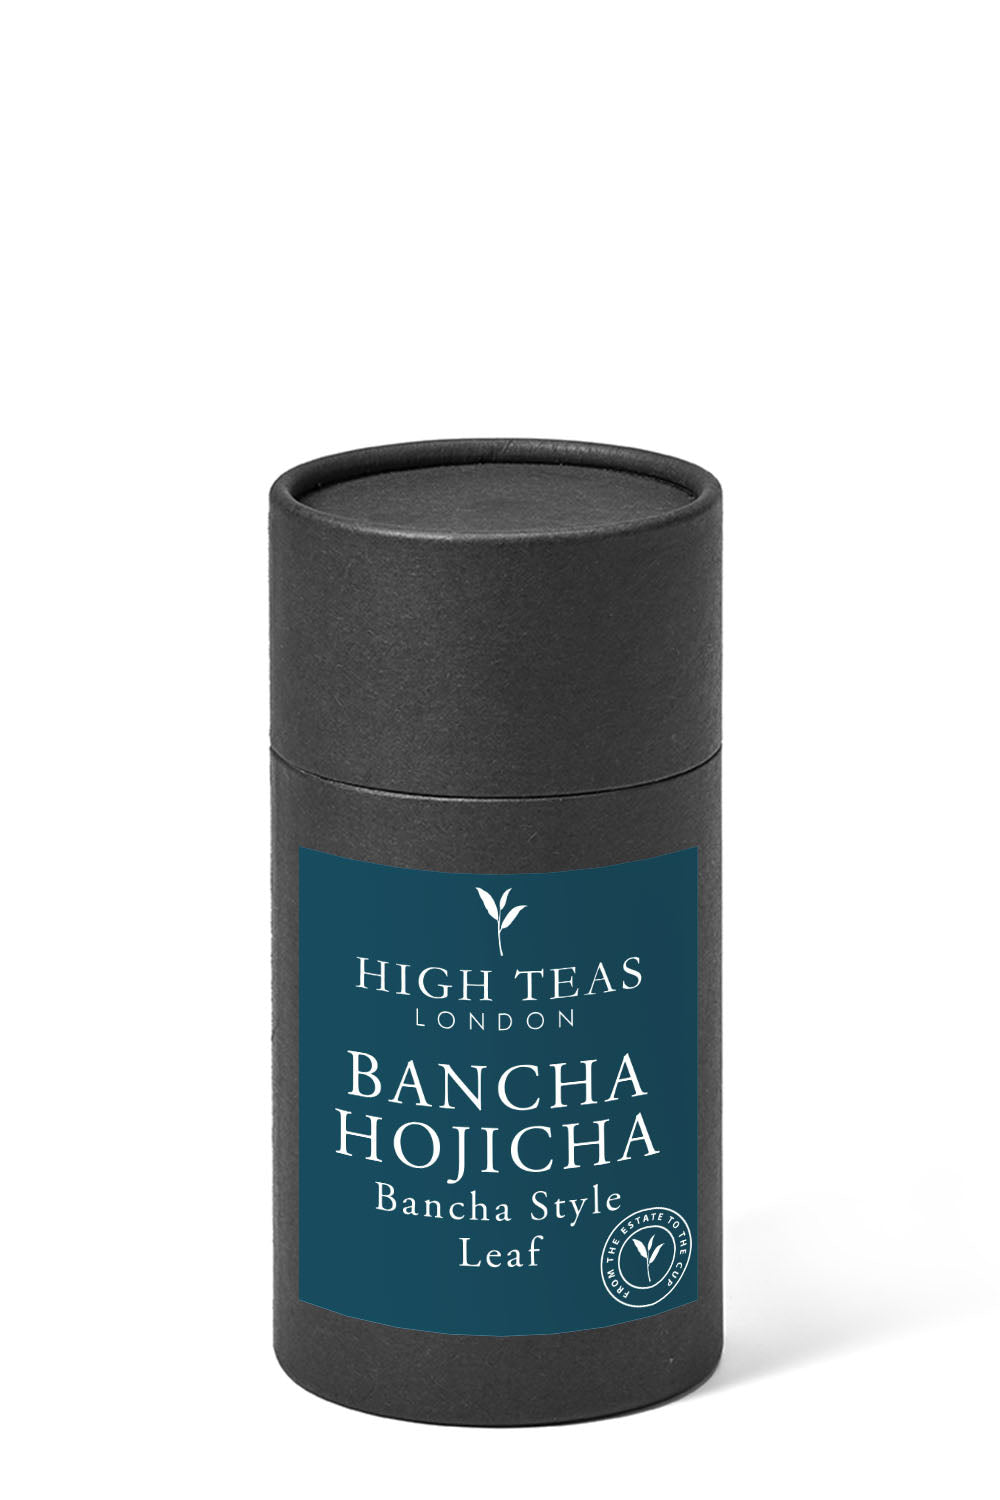 Bancha Hojicha-60g gift-Loose Leaf Tea-High Teas